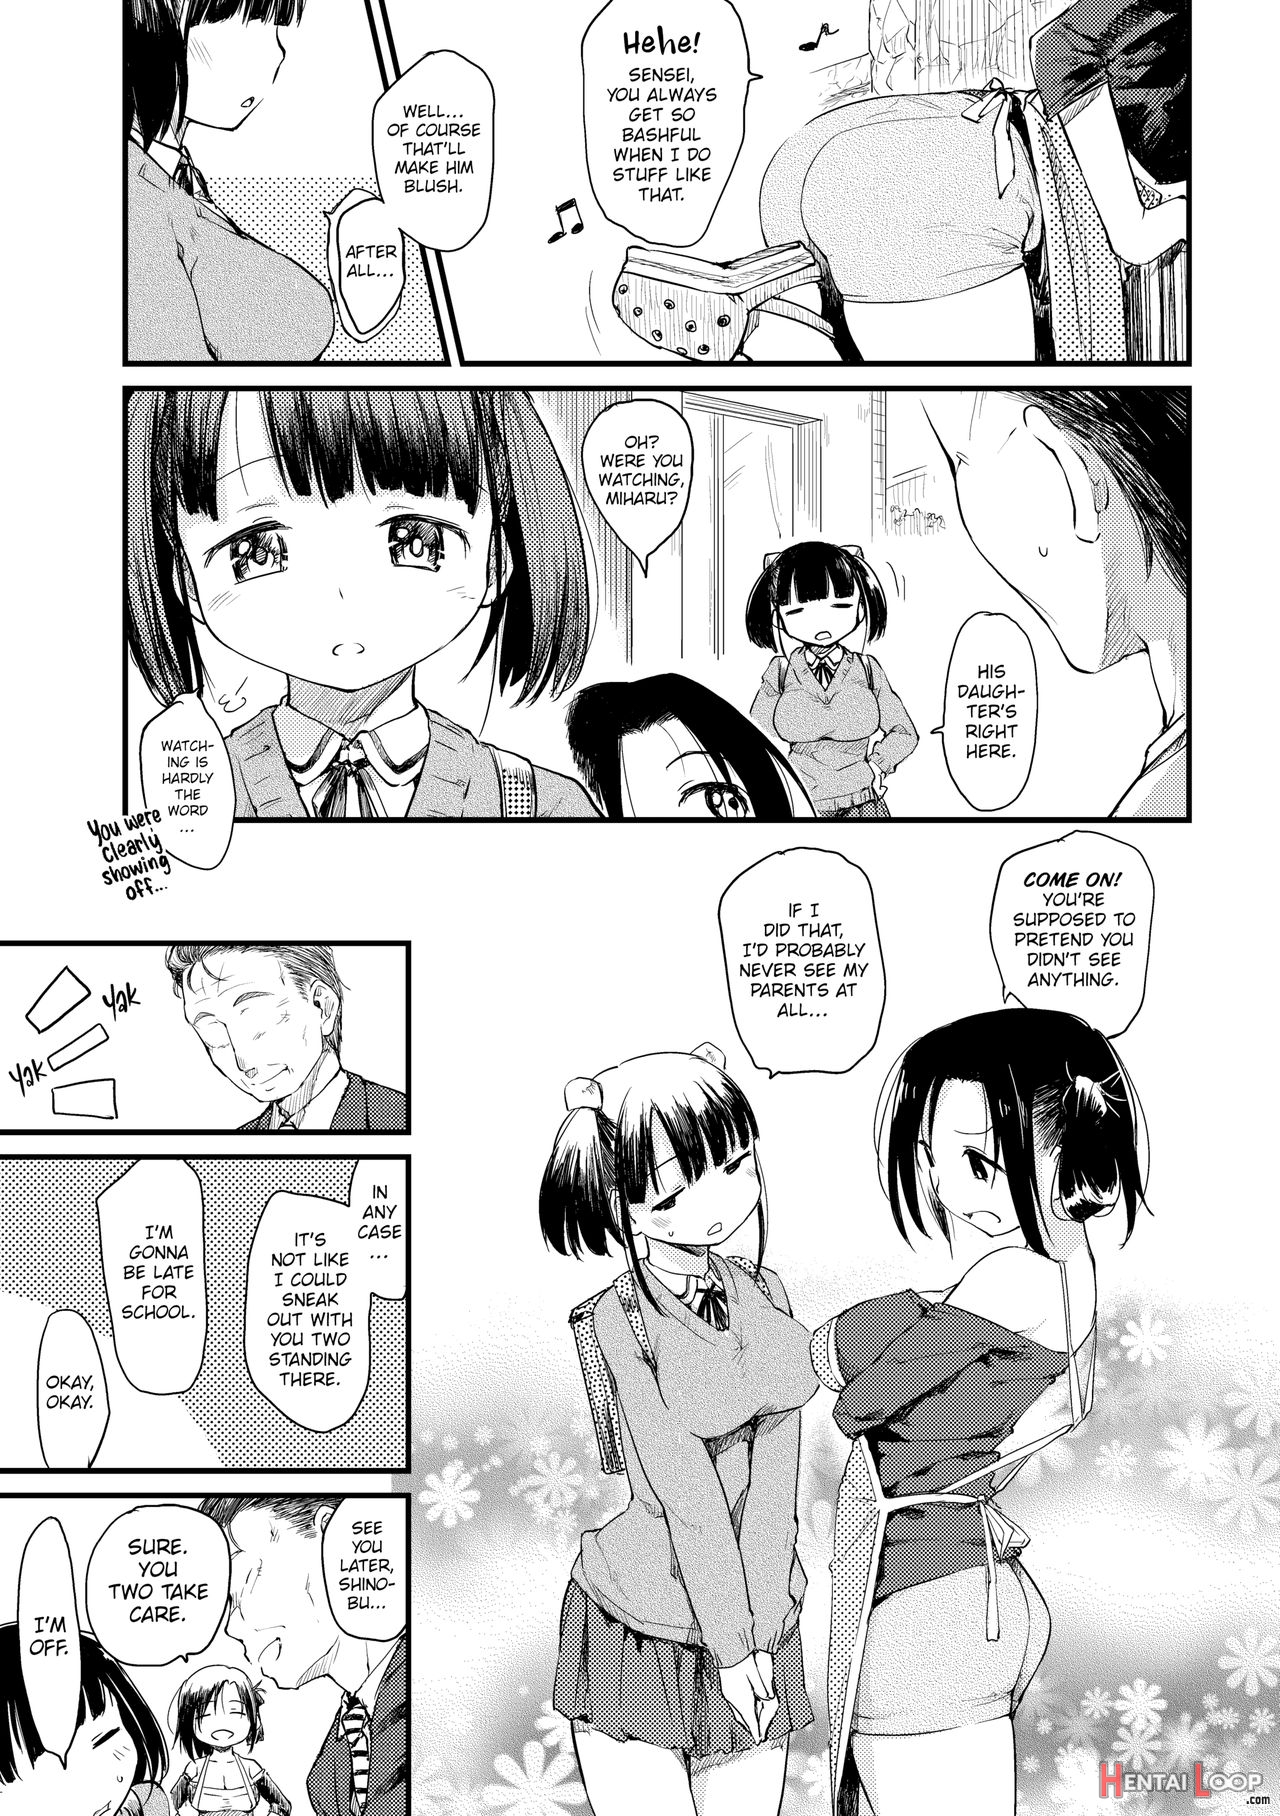 The Kutsura Family's Daily Sex Life page 6